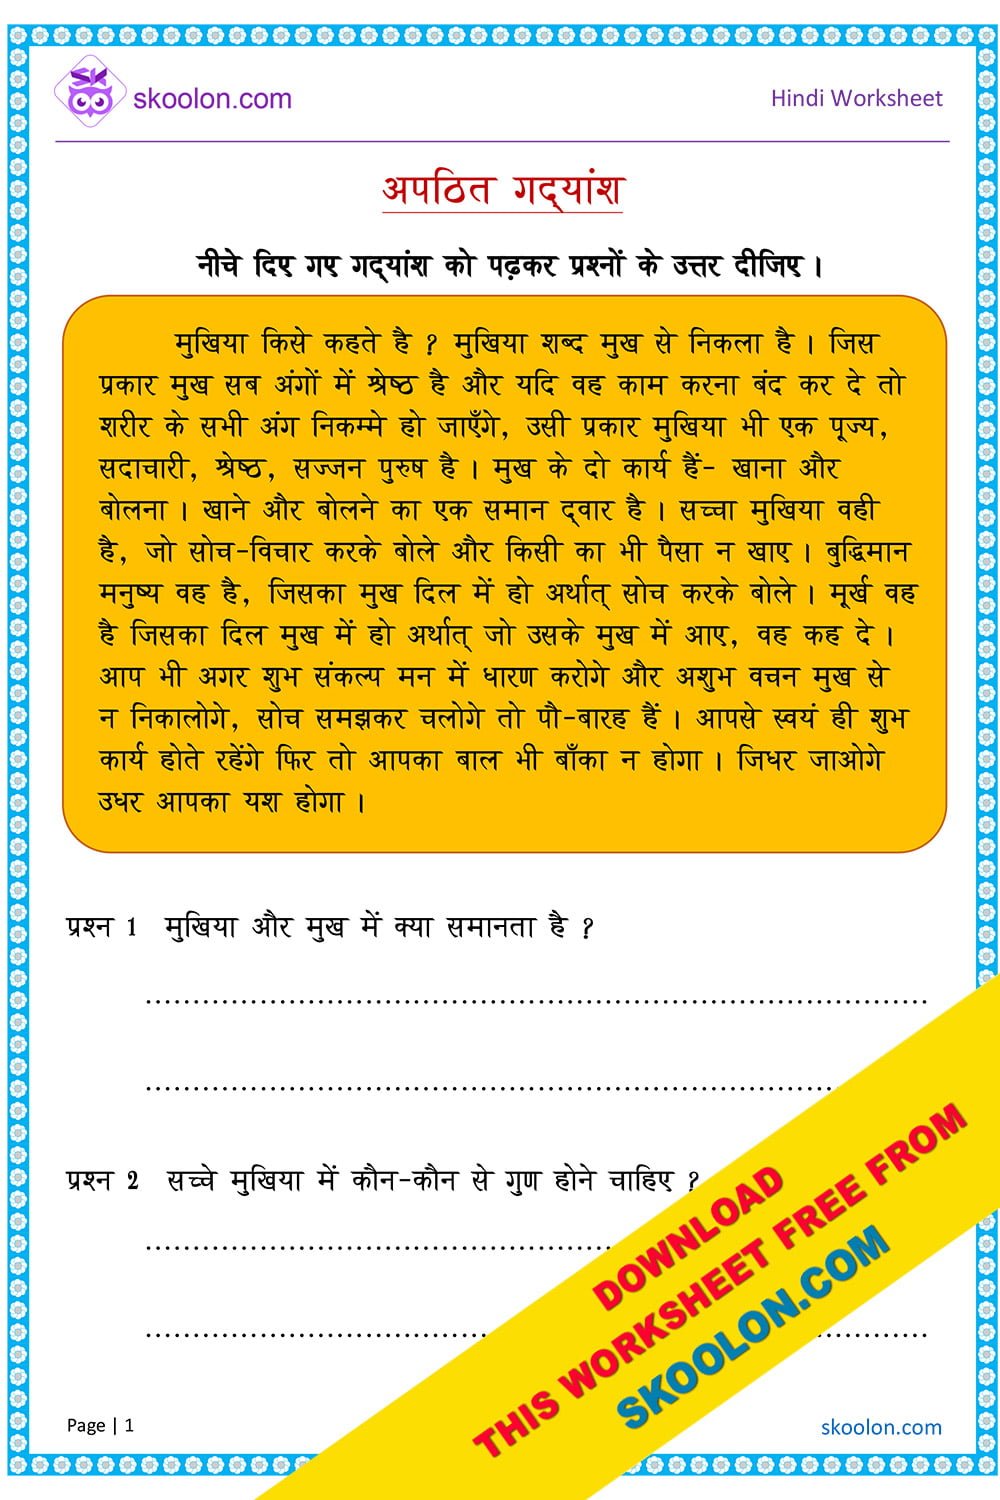 avikari-shabd-worksheet-in-hindi-free-download-gmbar-co